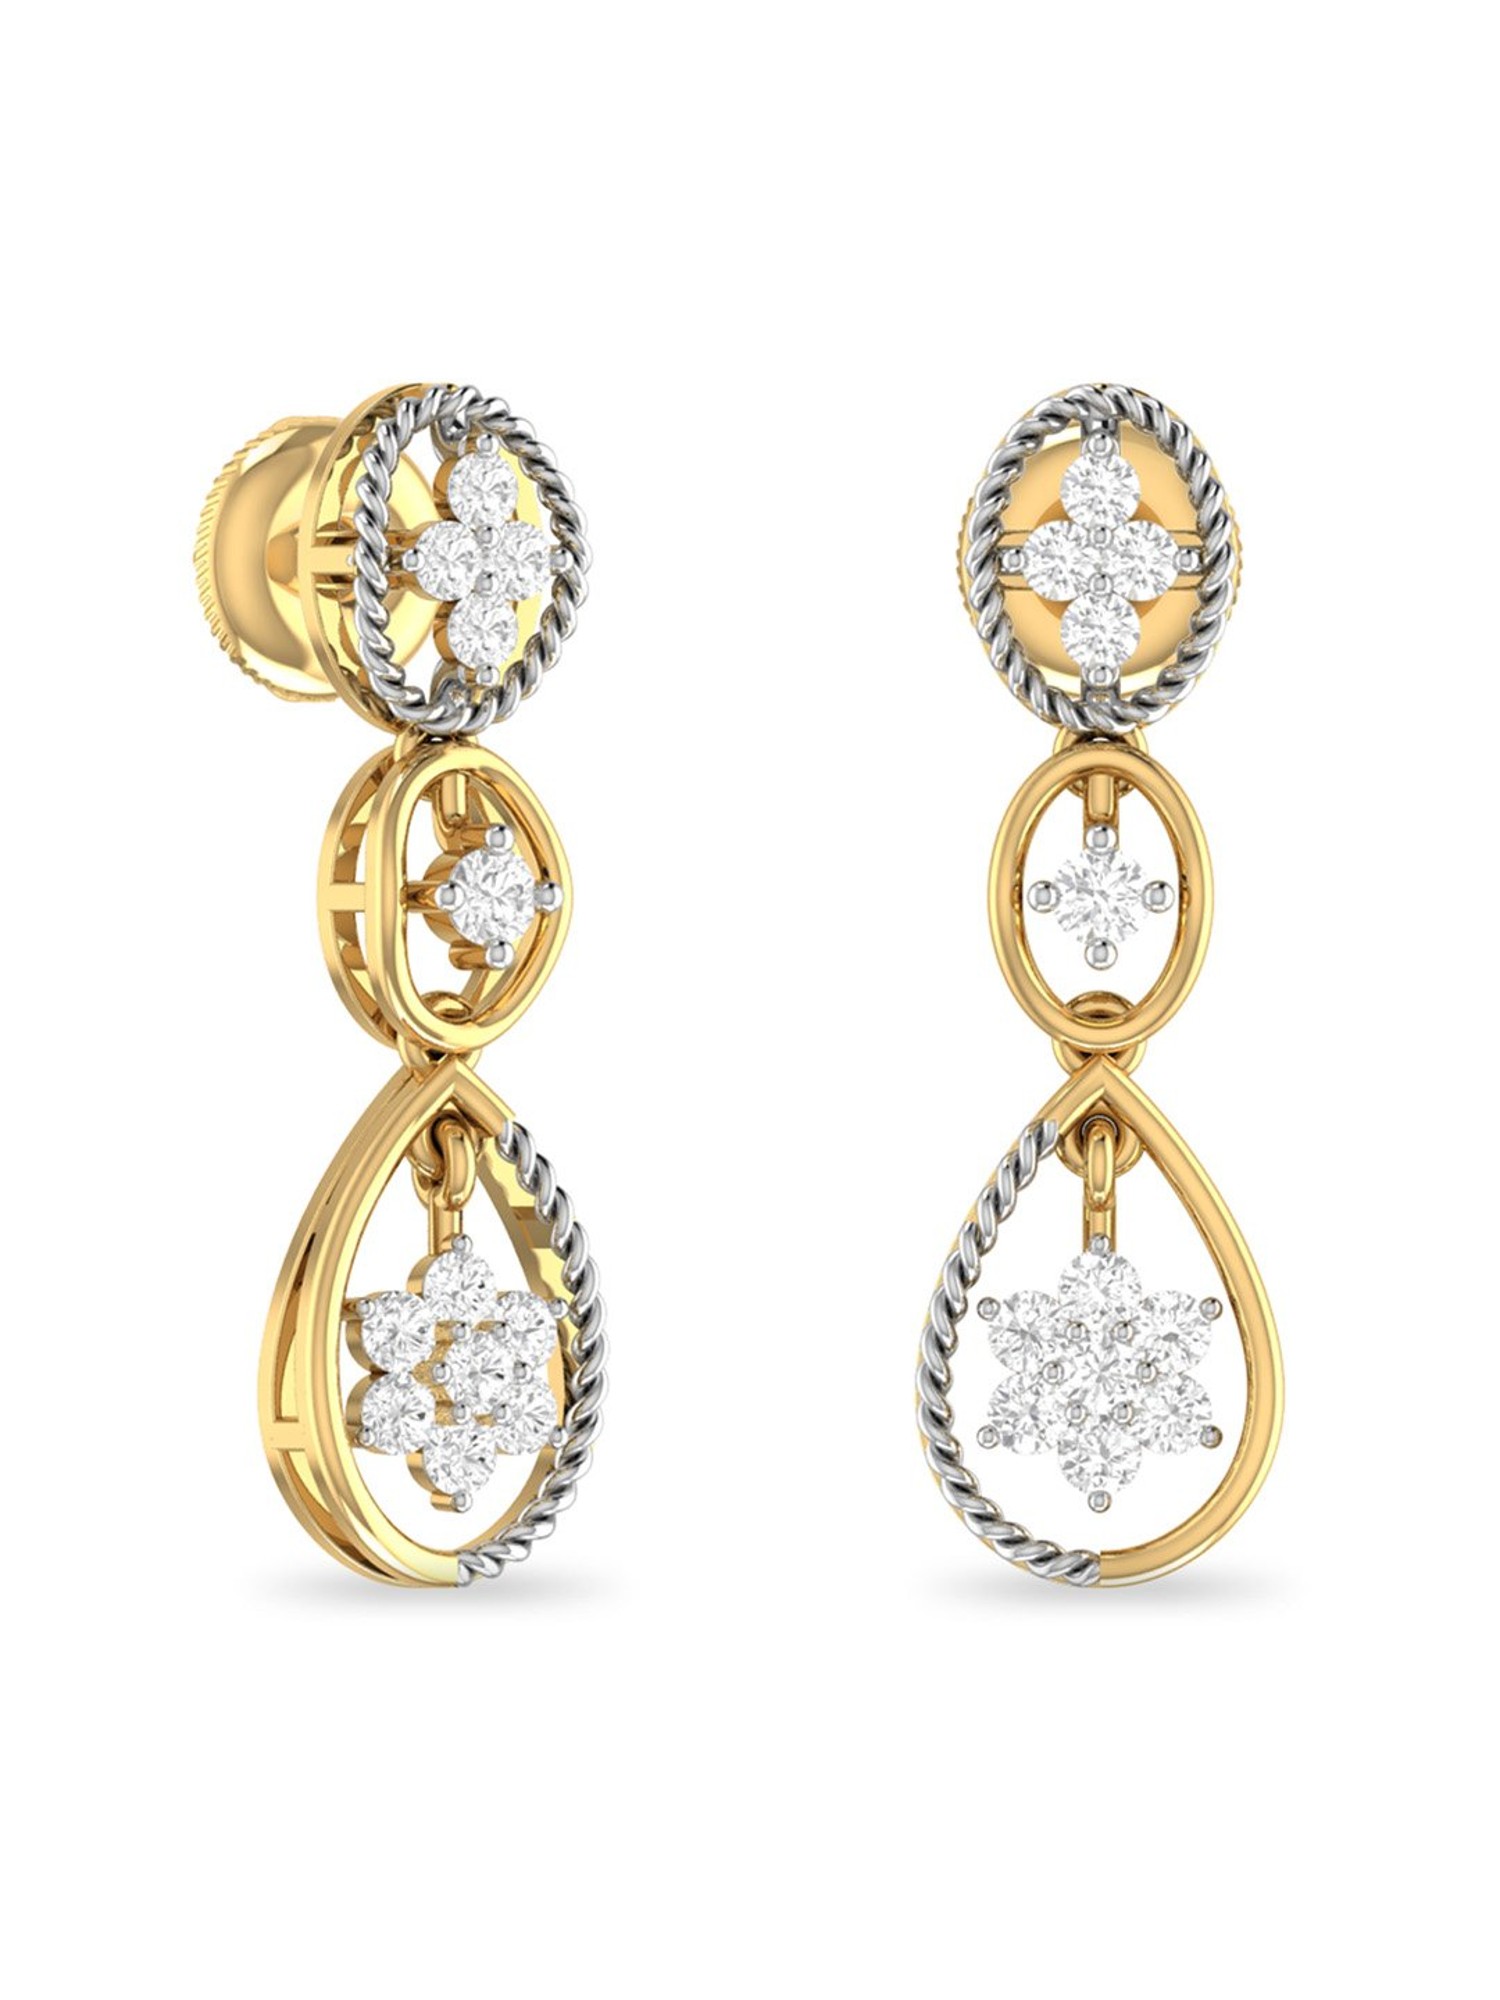 PC Jeweller The Kienan 18KT Yellow Gold and Diamond Stud Earrings for Women   Amazonin Fashion